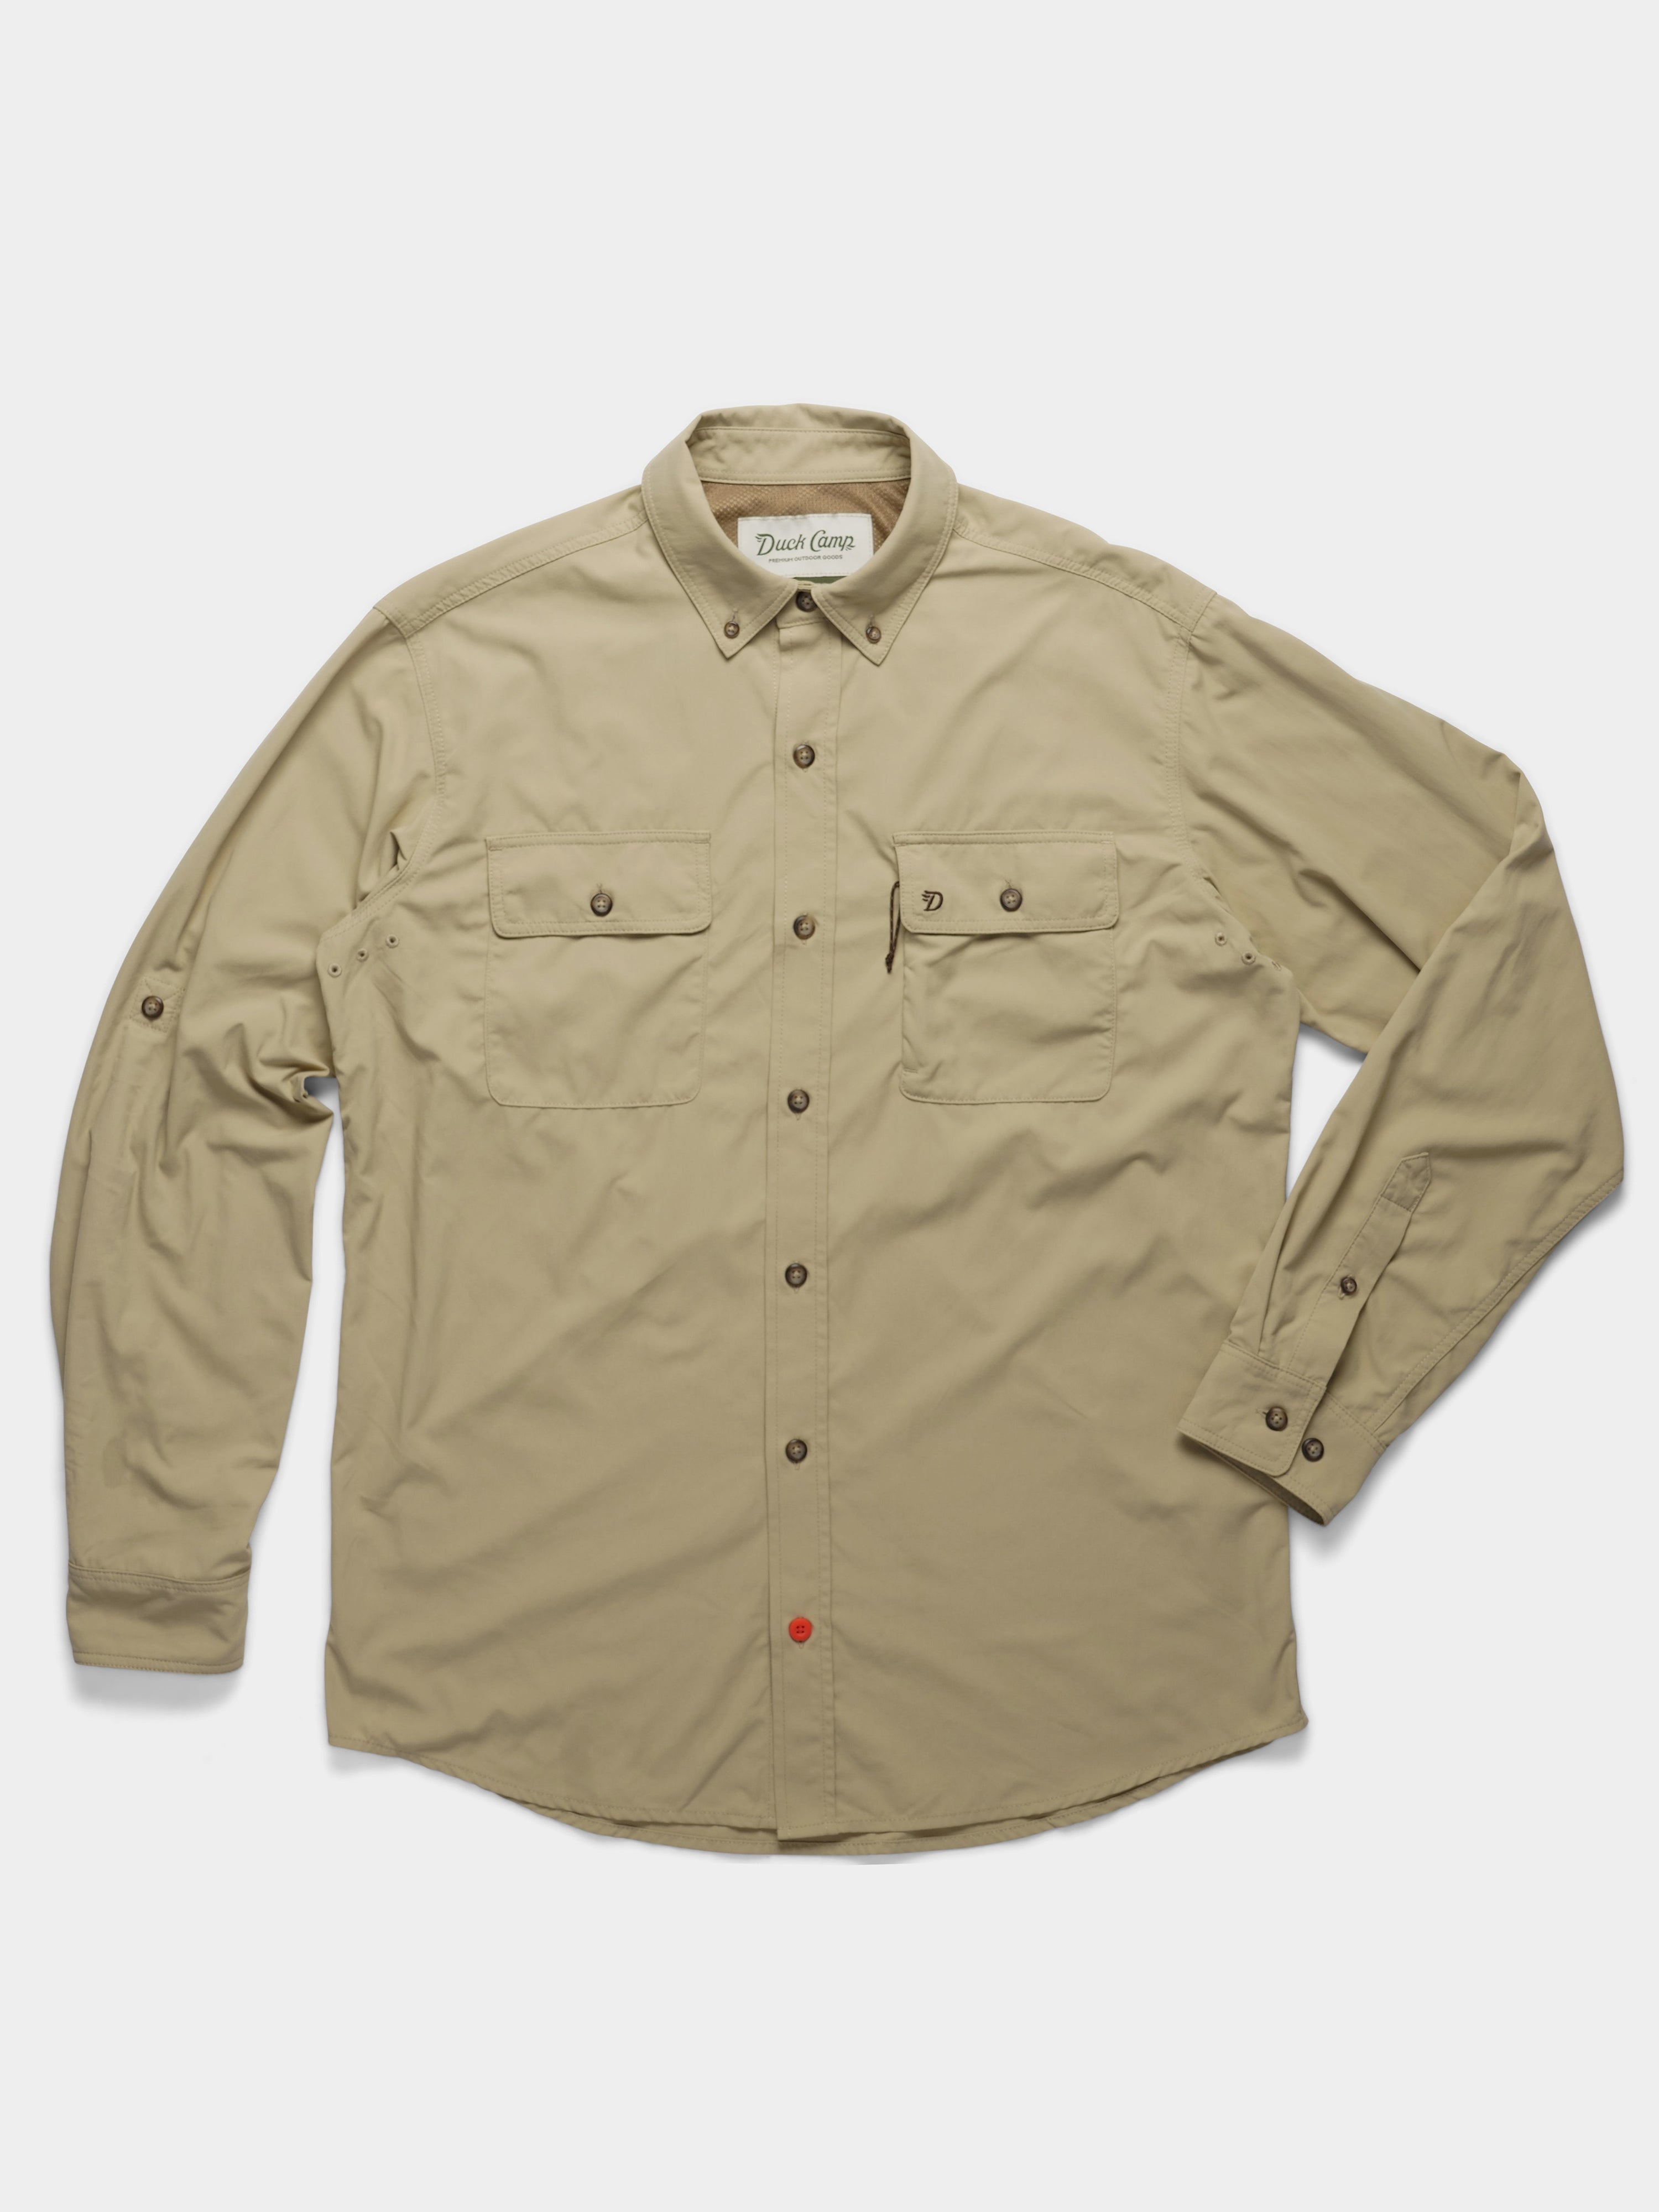 Lightweight Hunting Shirt Long Sleeve - Pumice – Duck Camp